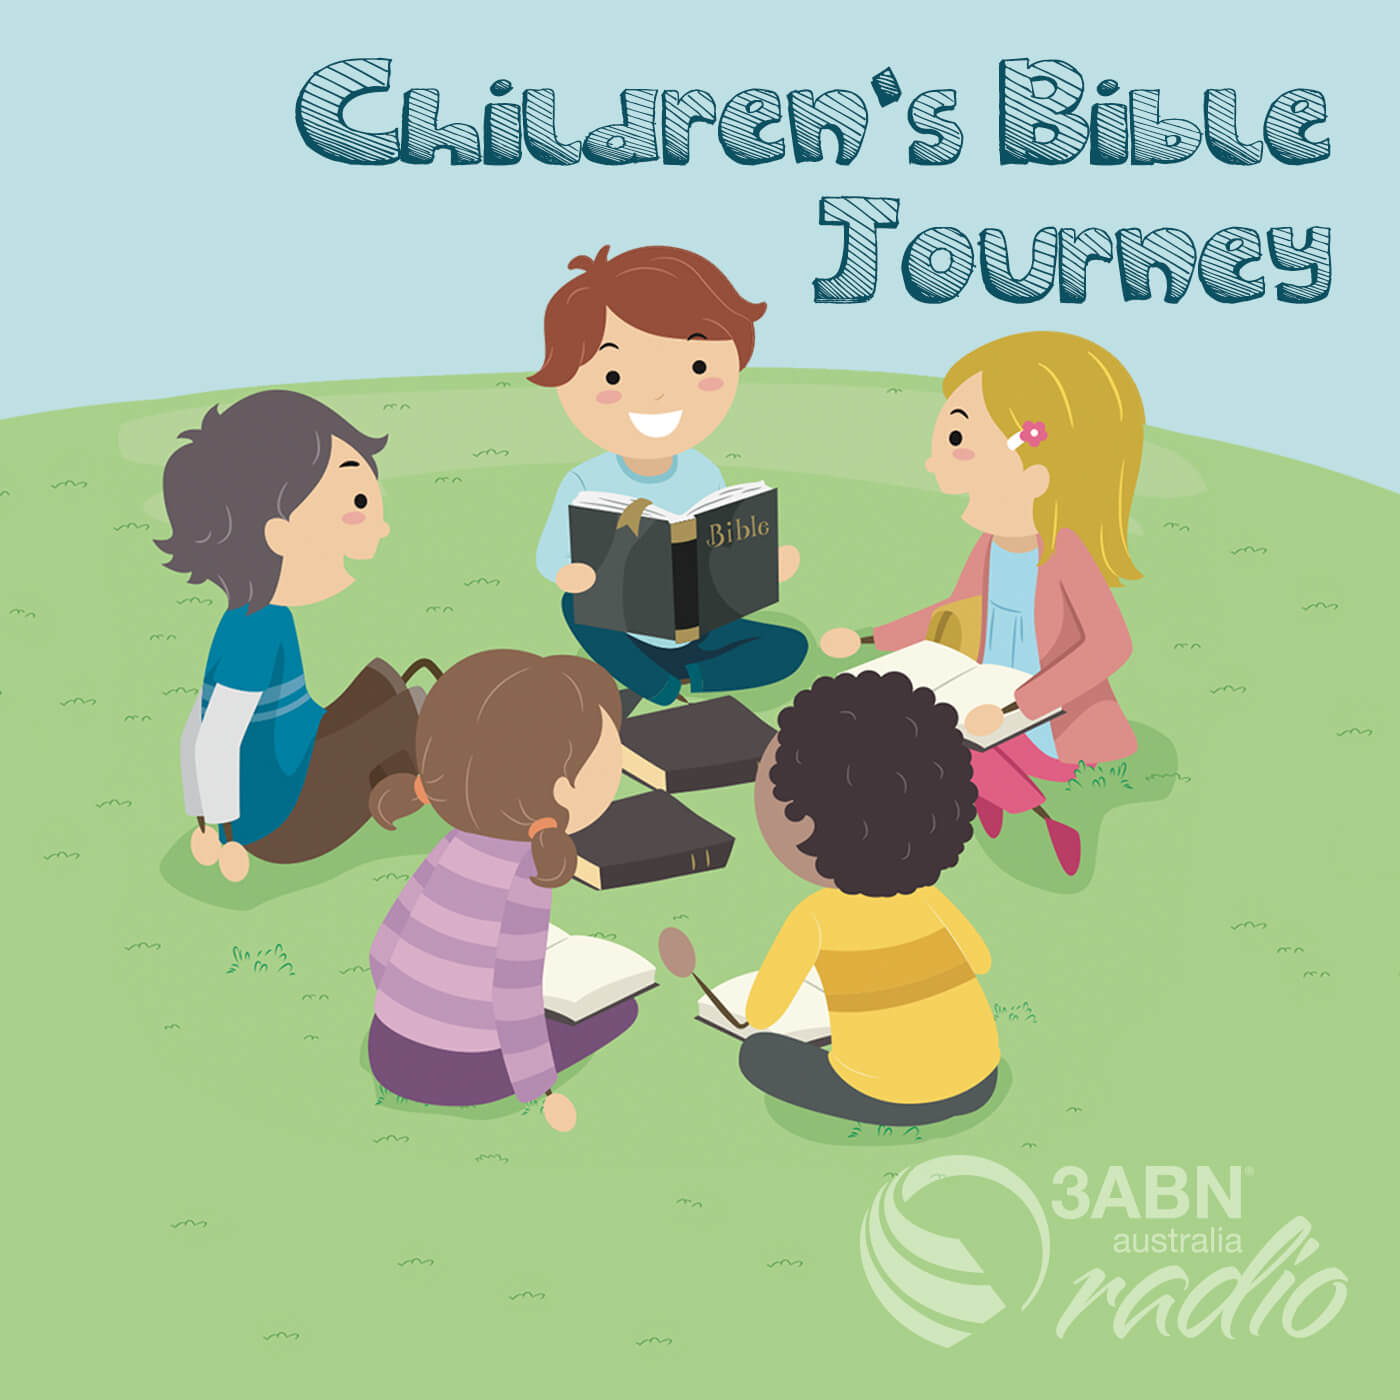 Children's Bible Journey - 2208